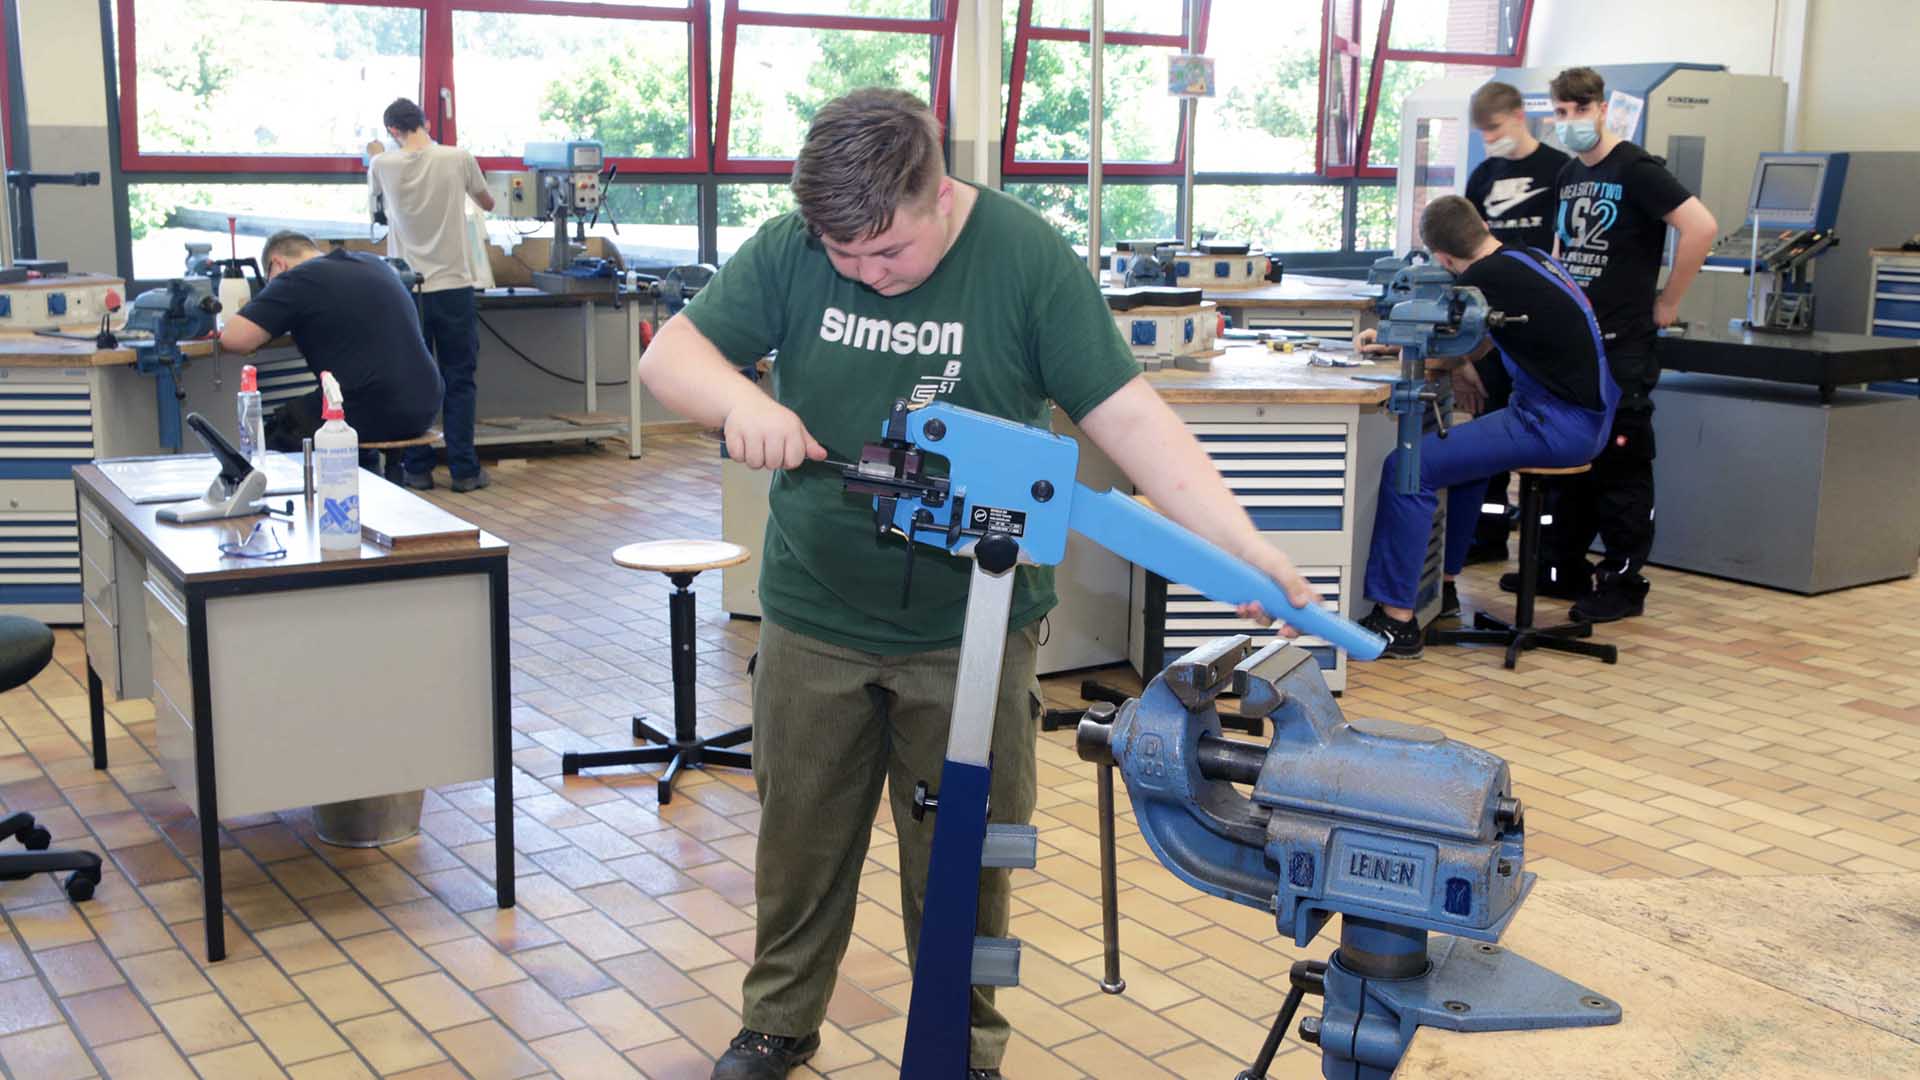 Ausbildung mit dem ECKOLD Handformer an der BBS II Osterode - Berufsfachschule Metall